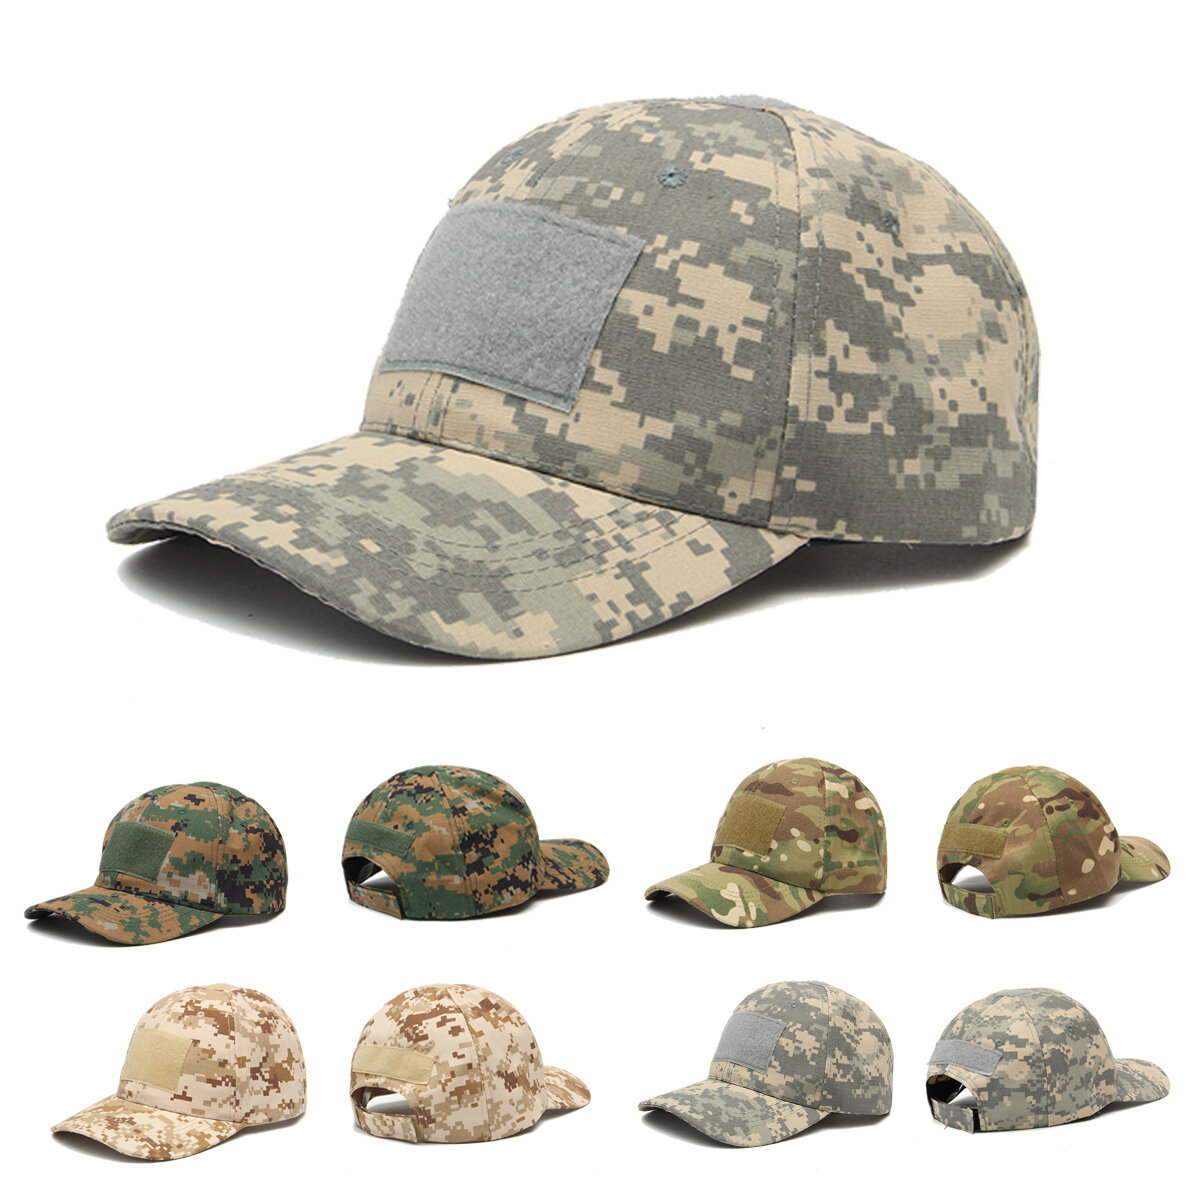 IPRee™ Camping Tactical Camouflage Sunhat Adjustable Travel Sunscreen Baseball Cap